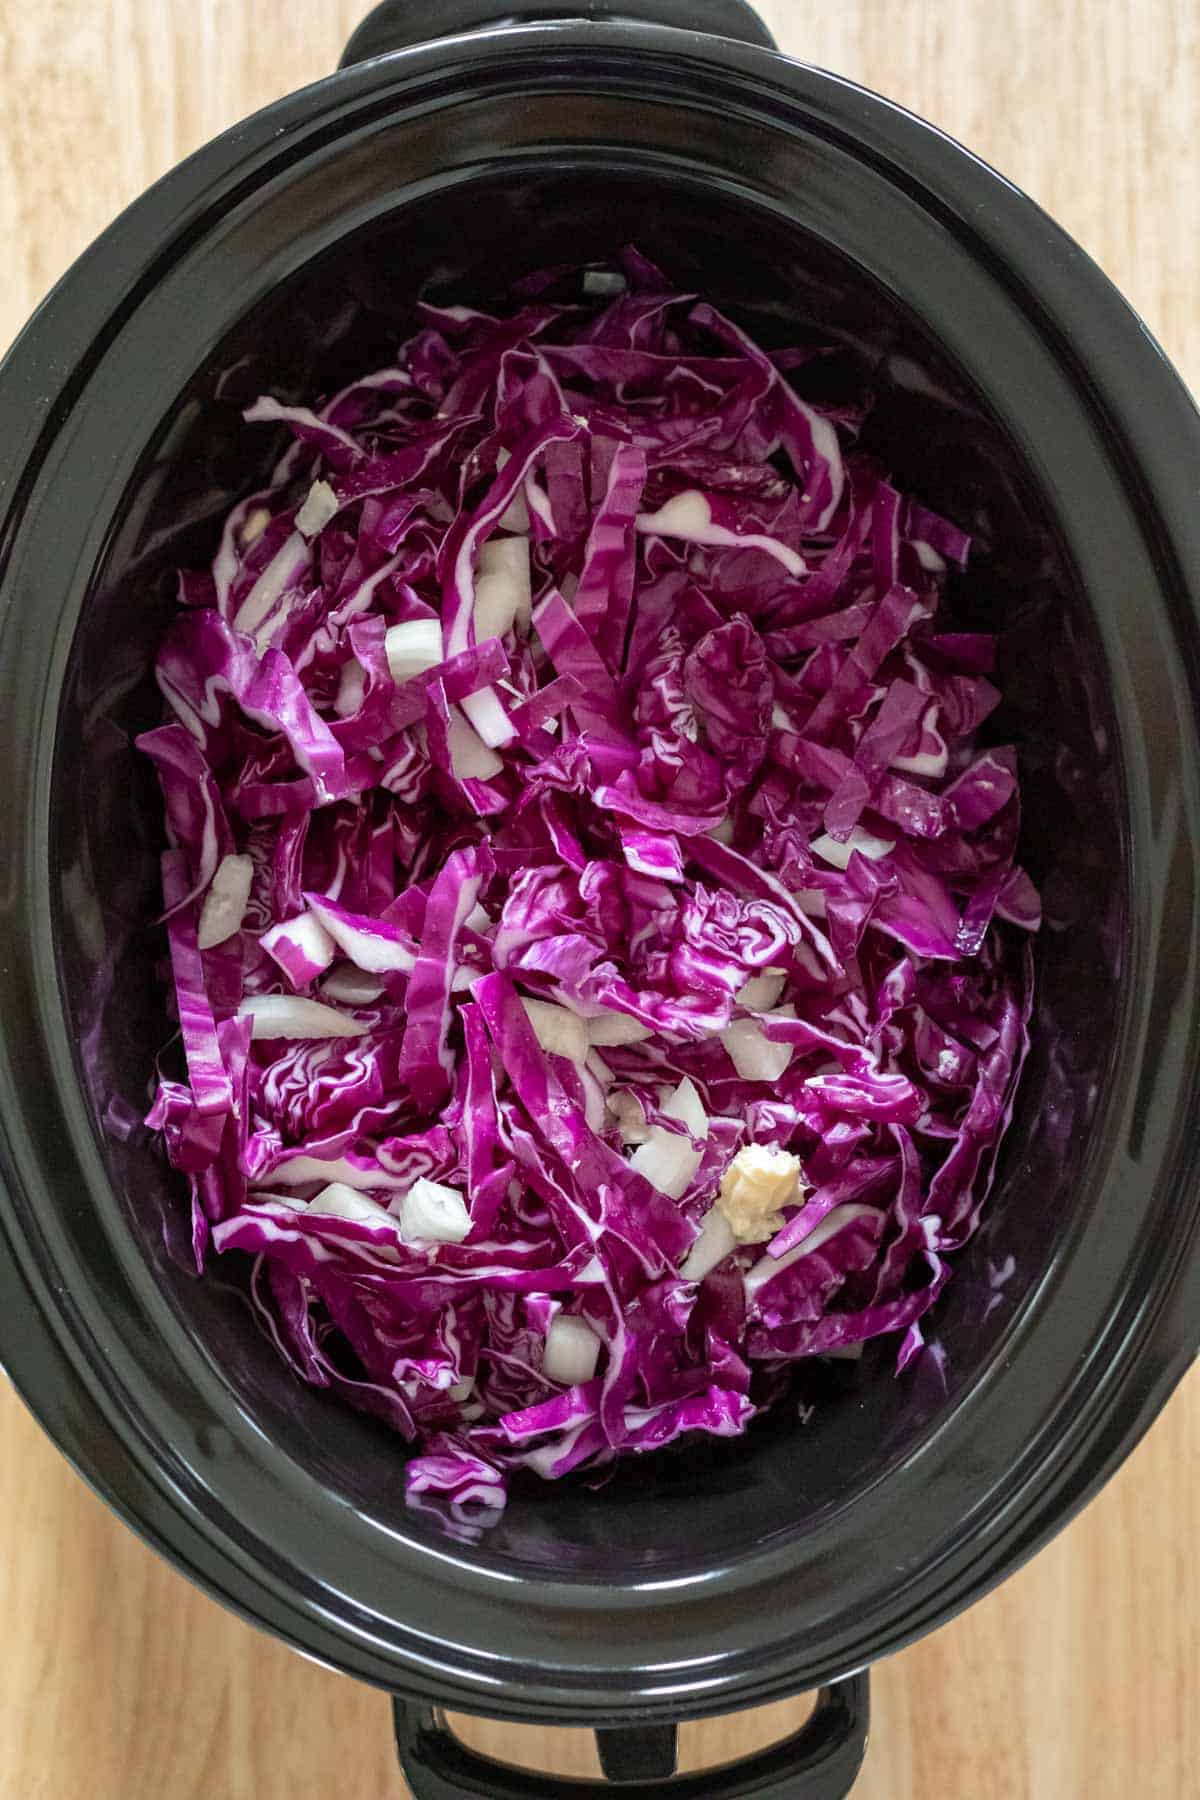 Freshly shredded red cabbage inside a slow cooker.